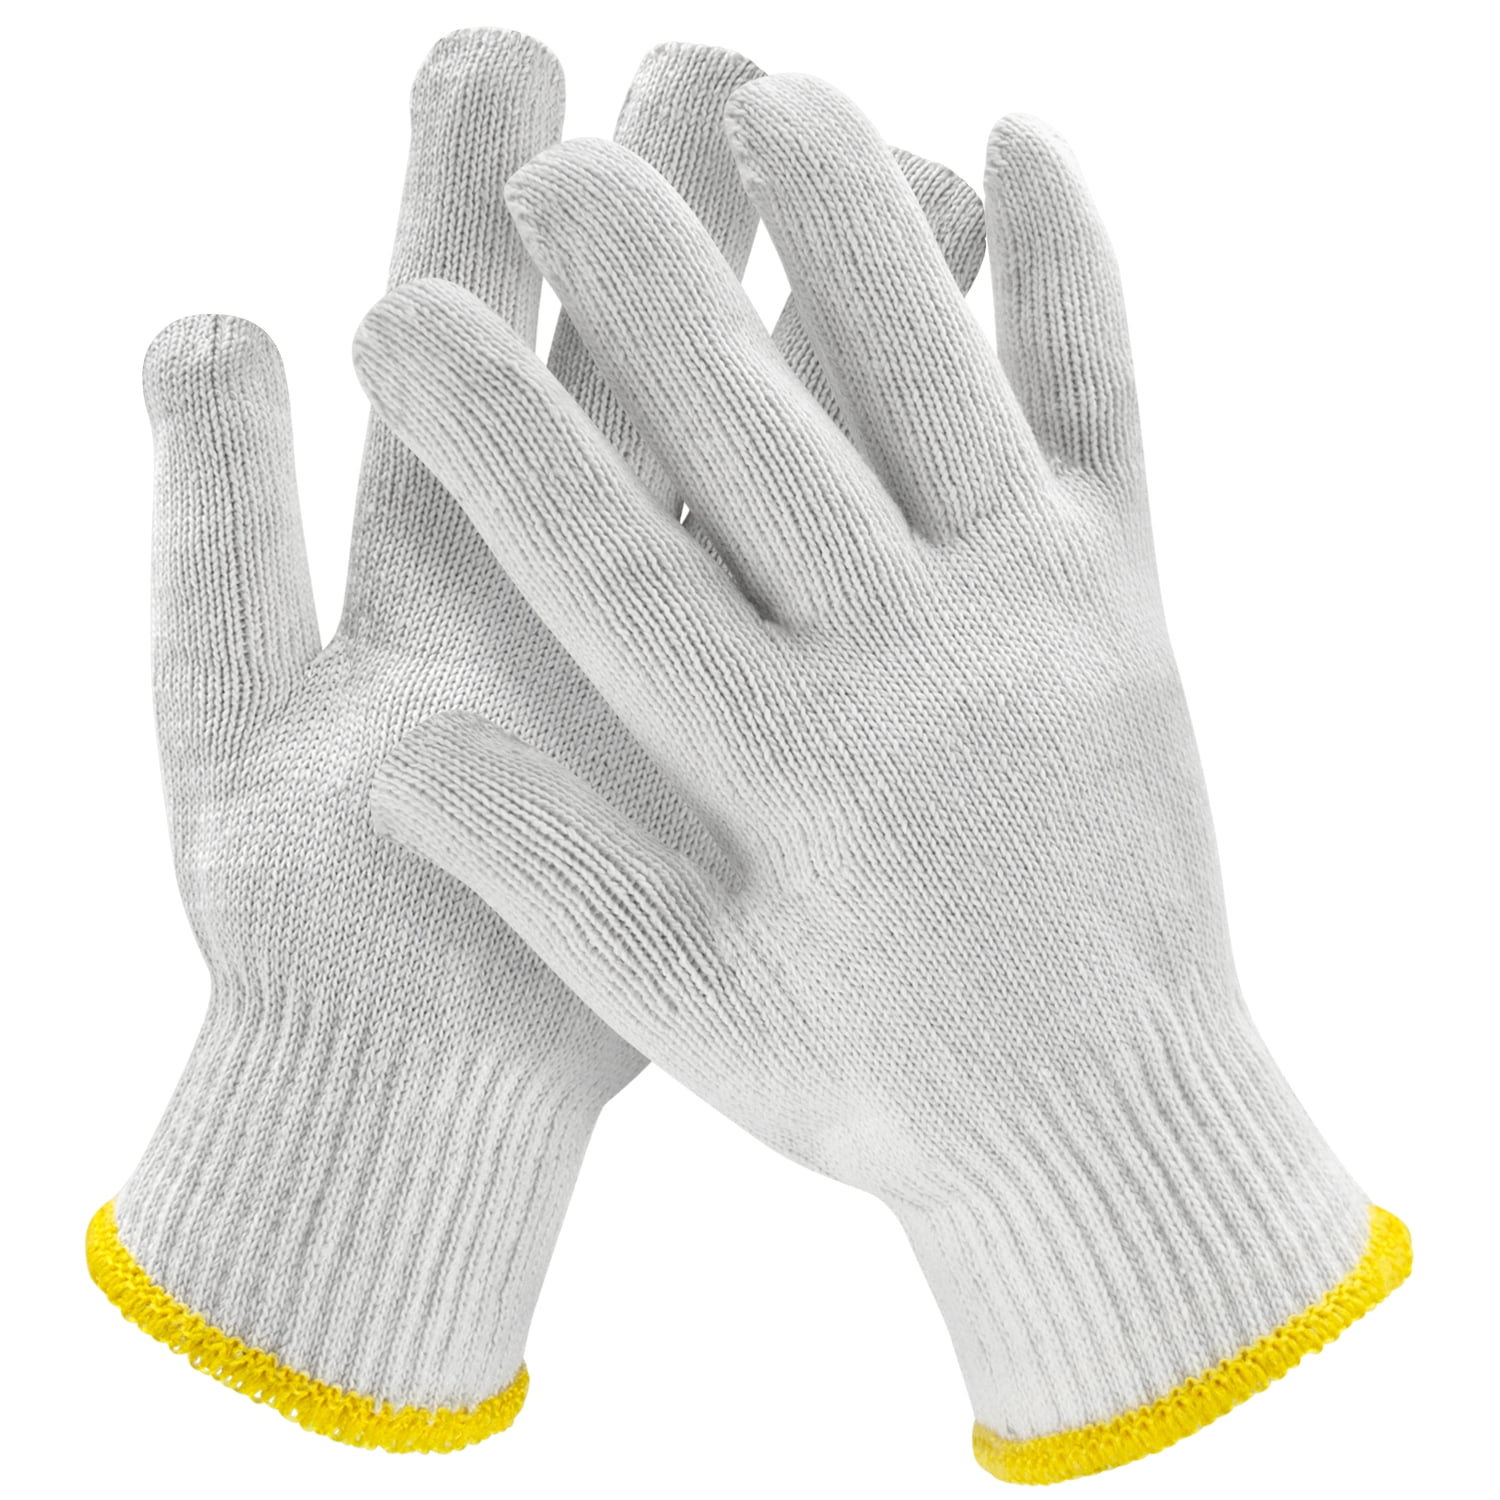 FMP Brands [24 Pairs] White Cotton Gloves - Safety Working Gloves